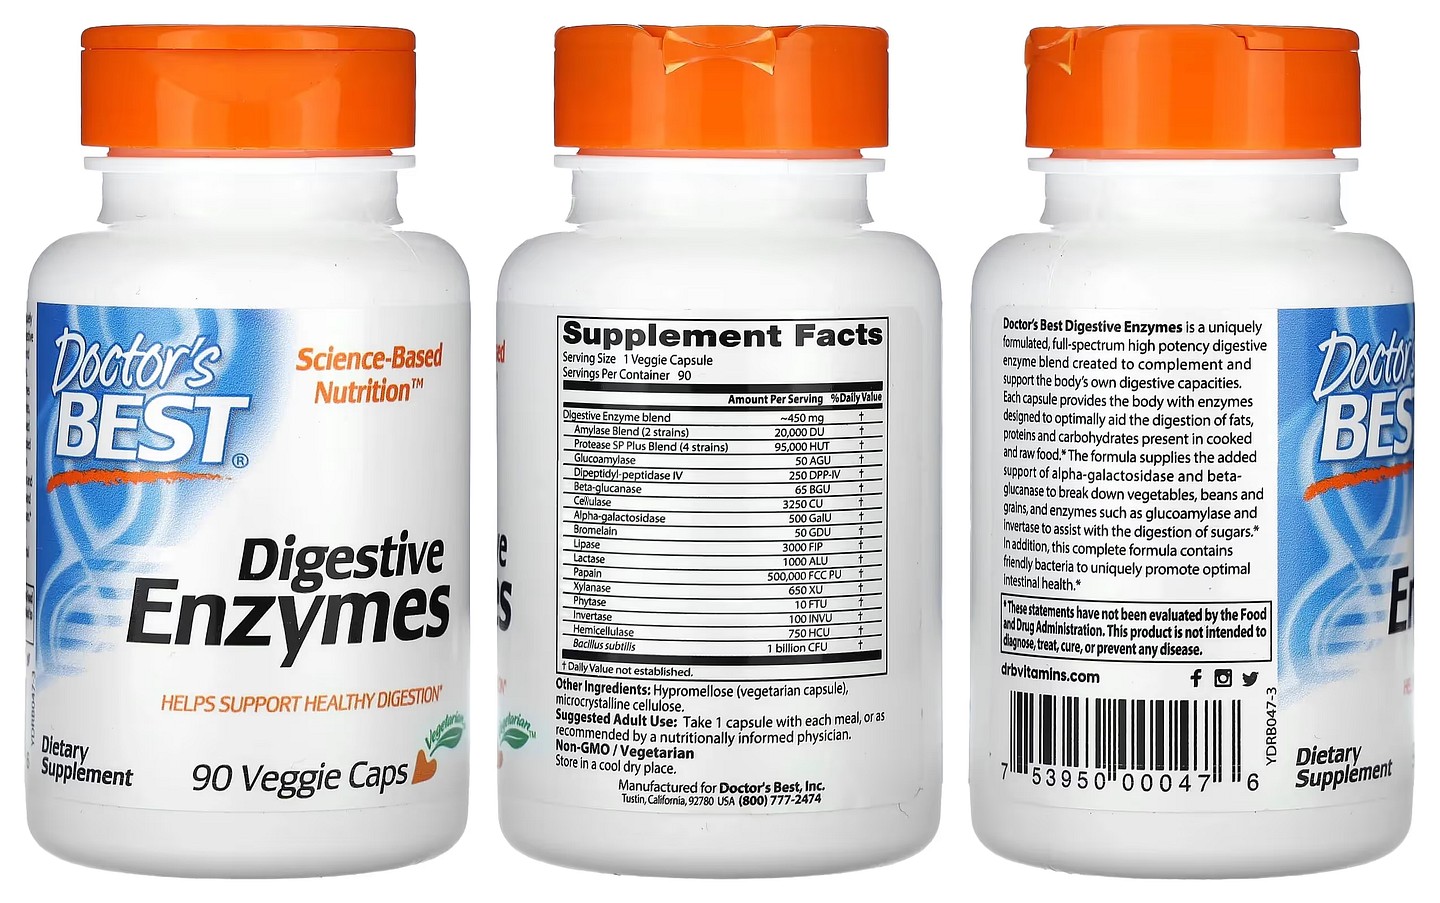 Doctor's Best, Digestive Enzymes packaging